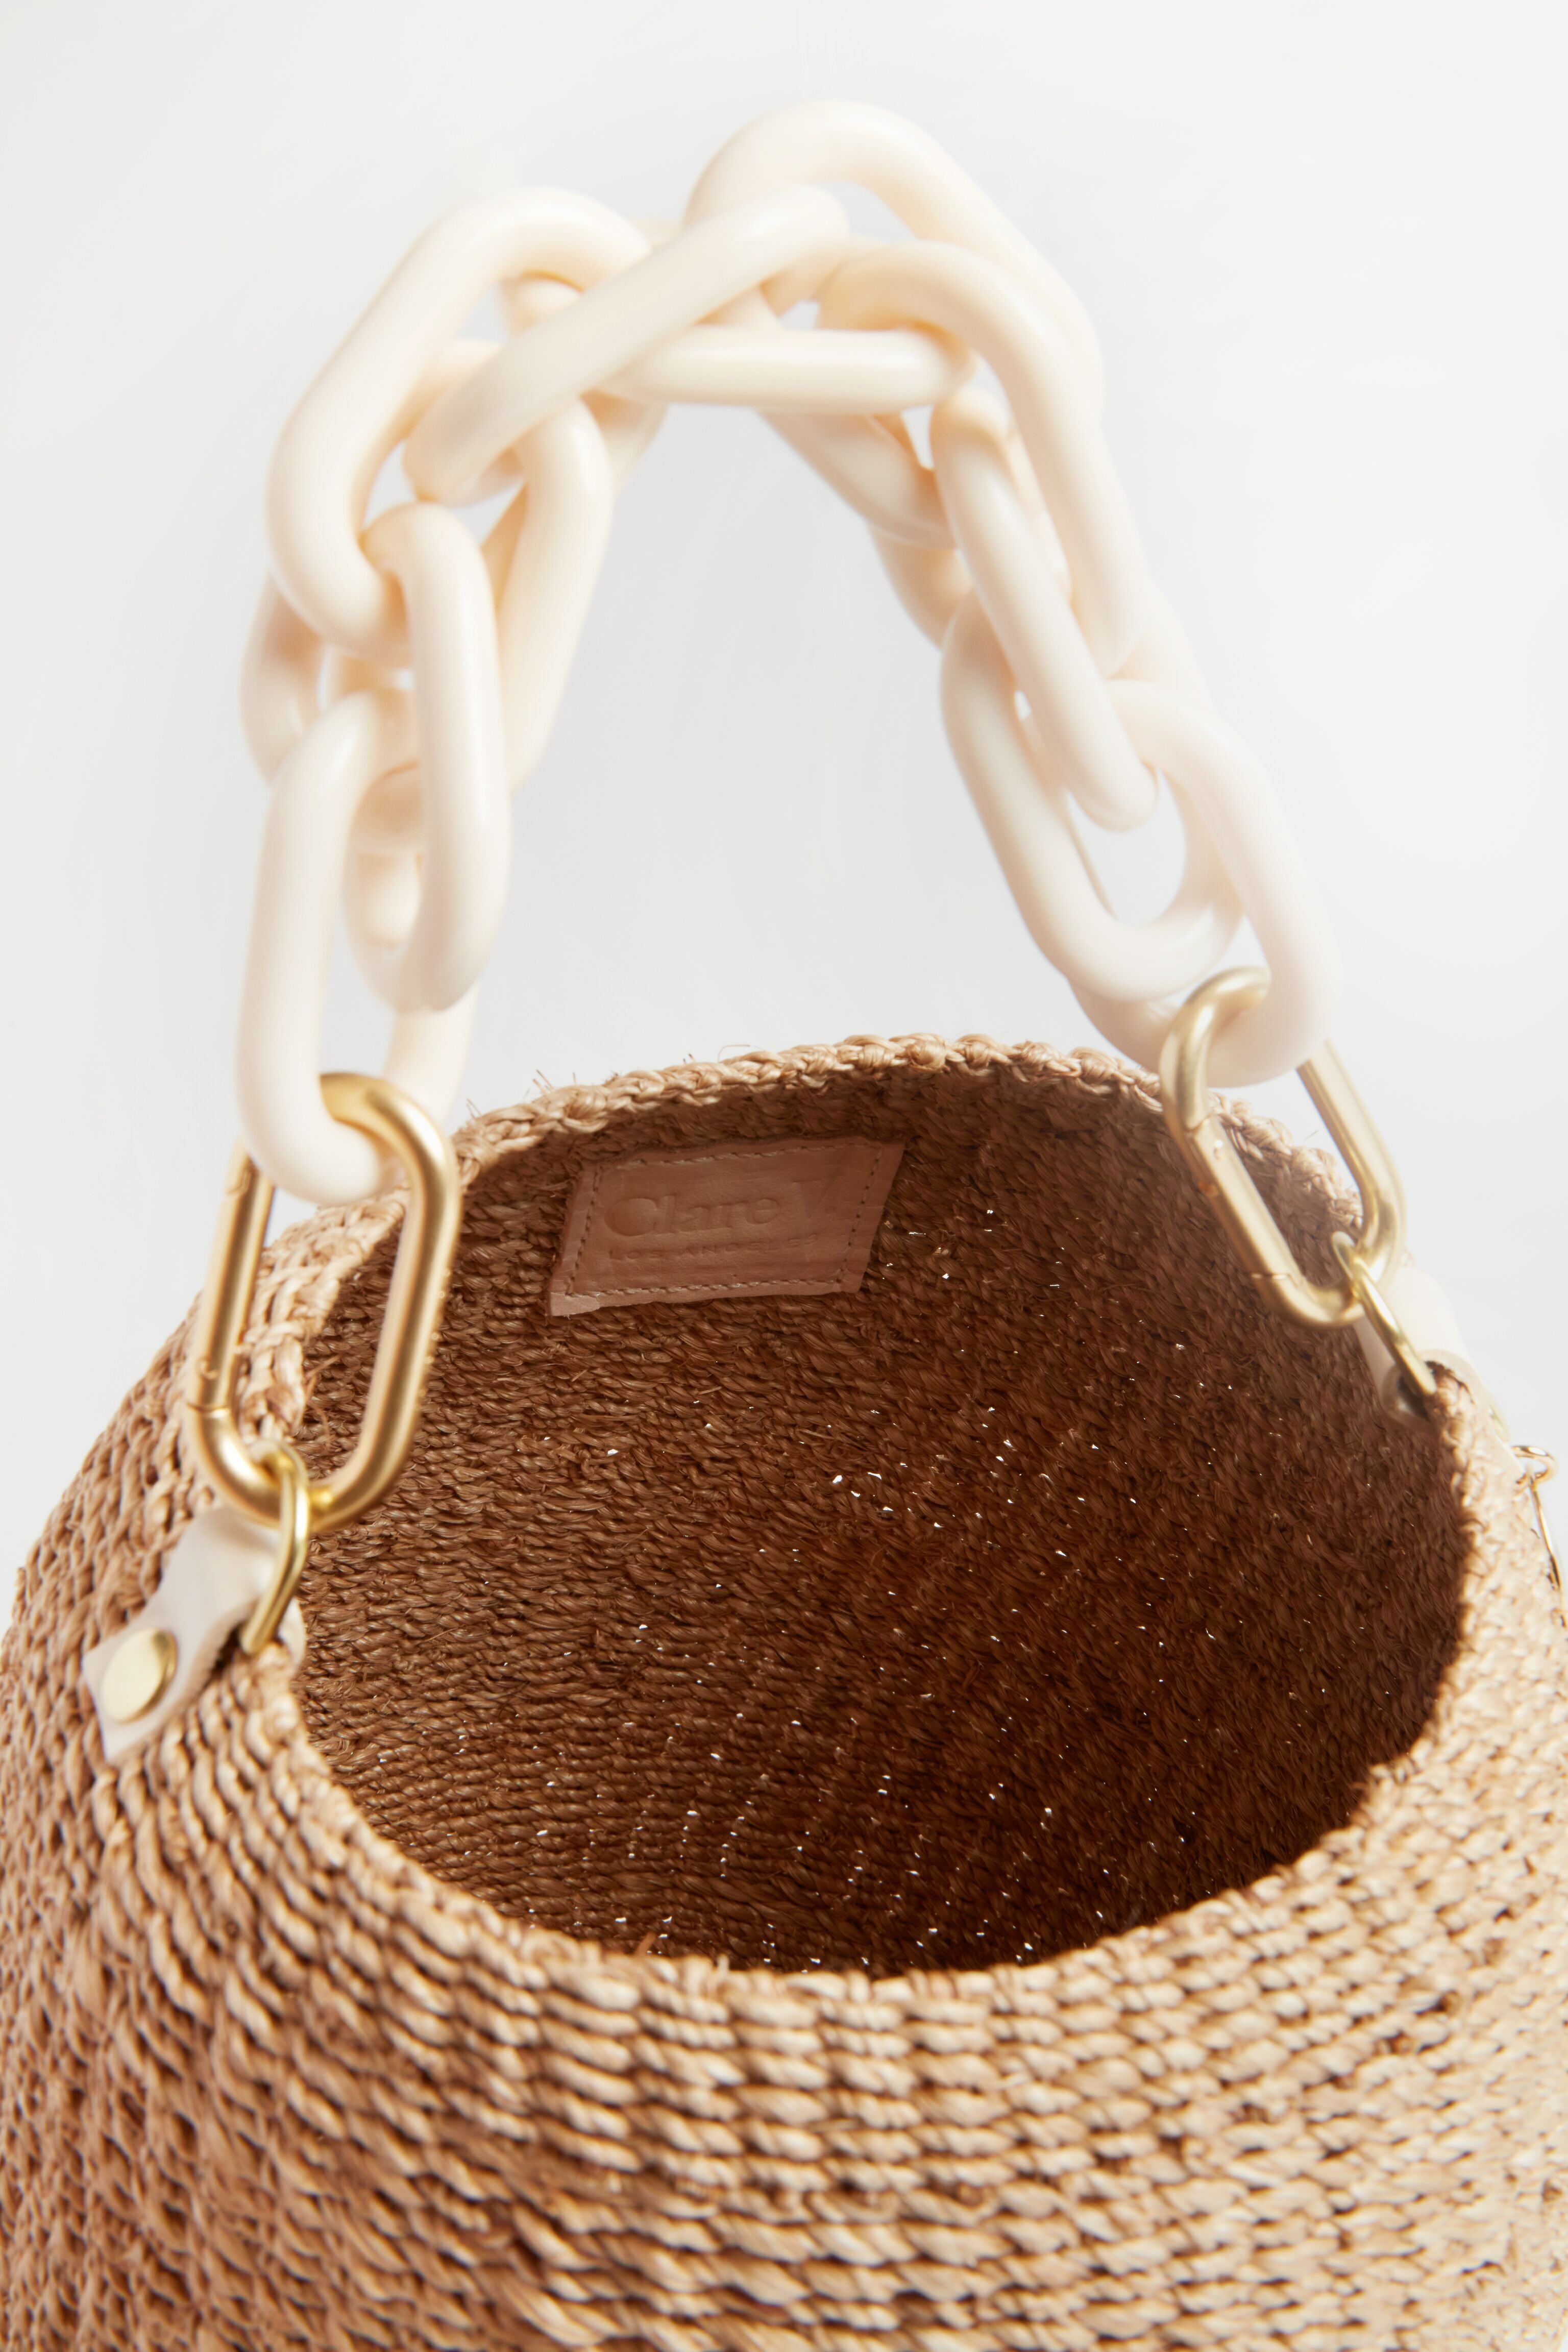 Clare V. + Pot de Miel Top Handle Straw Basket Bag